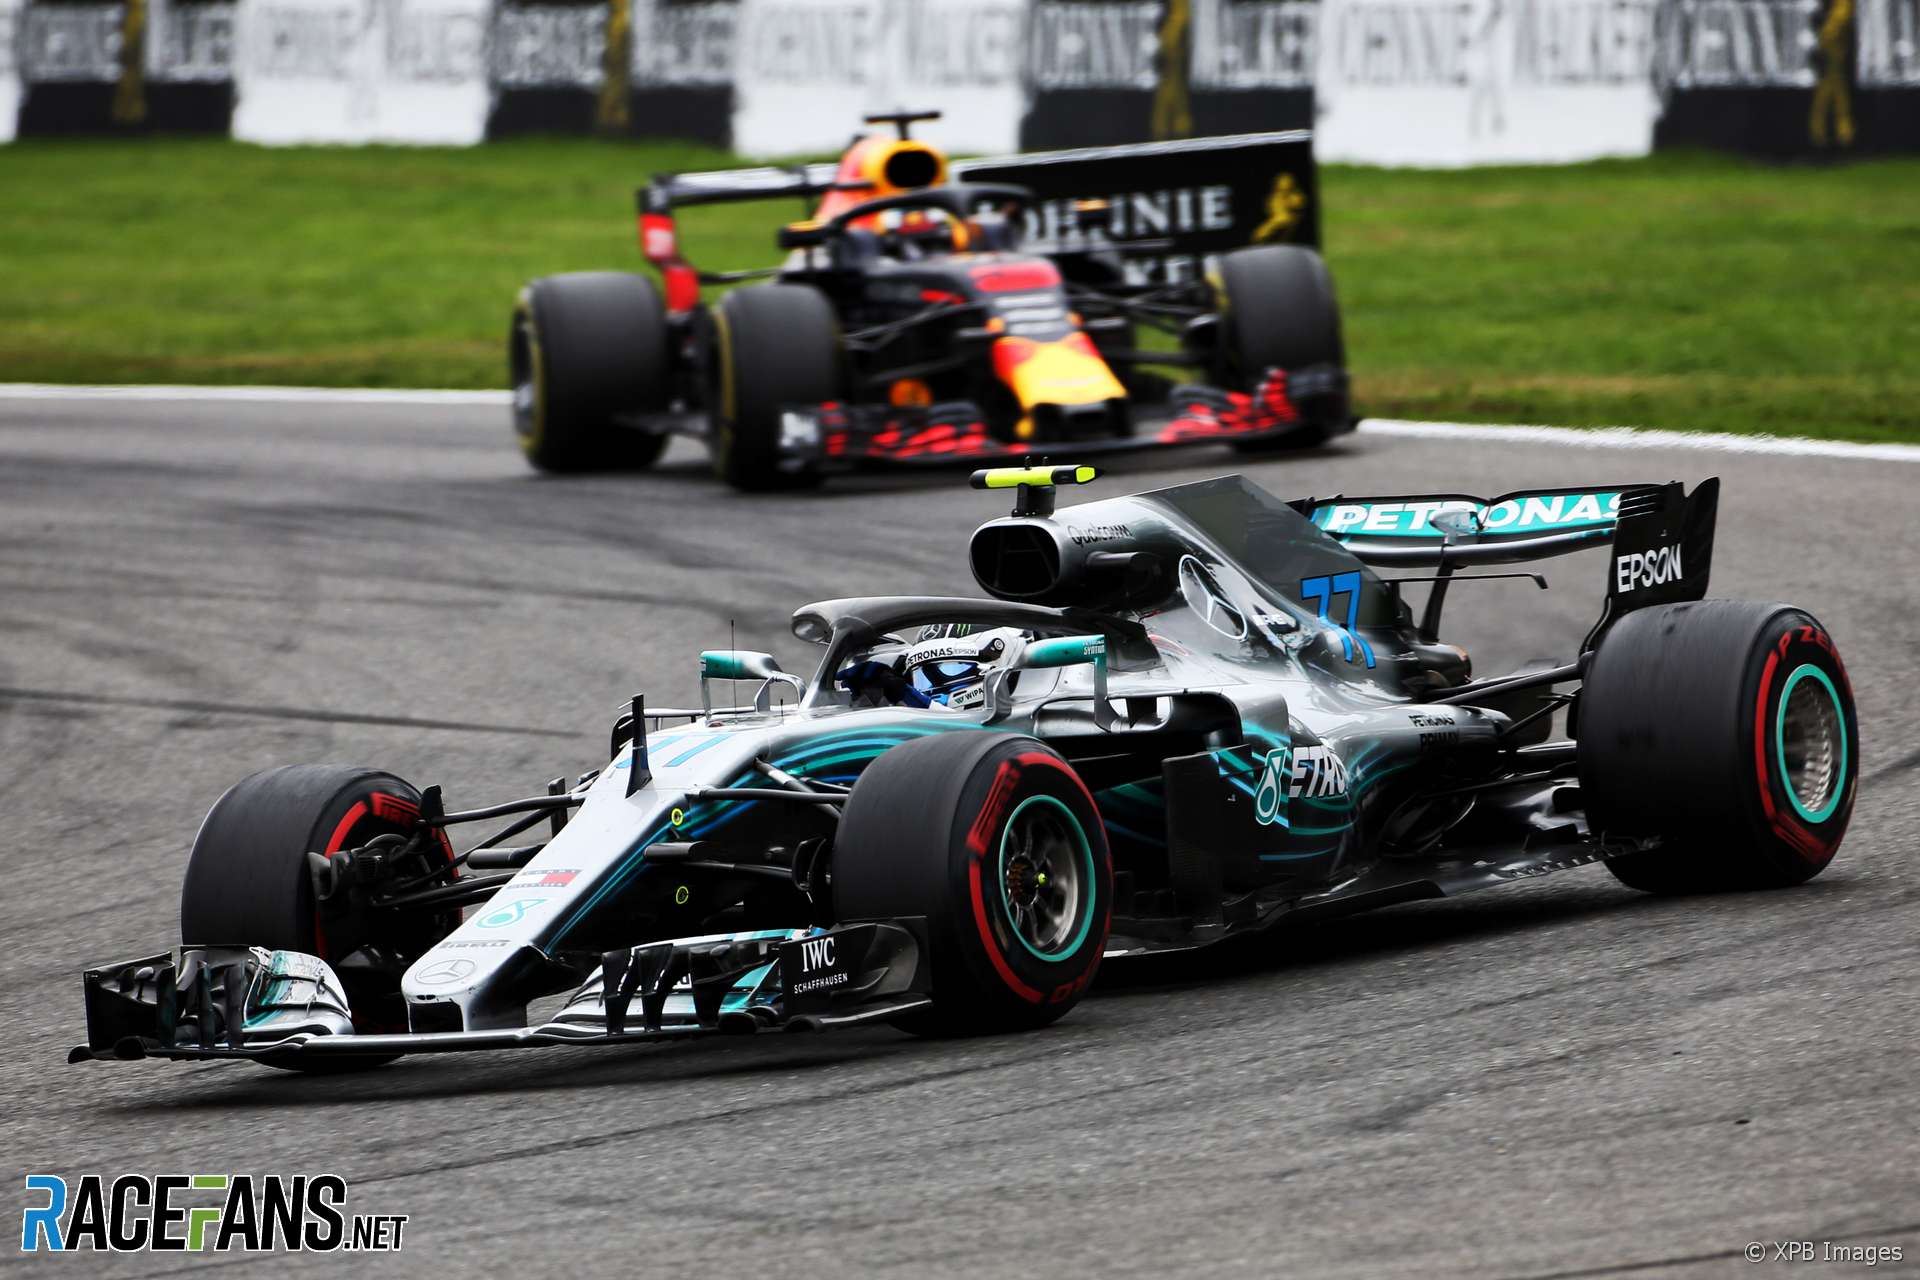 Valtteri Bottas, Mercedes, Spa-Francorchamps, 2018